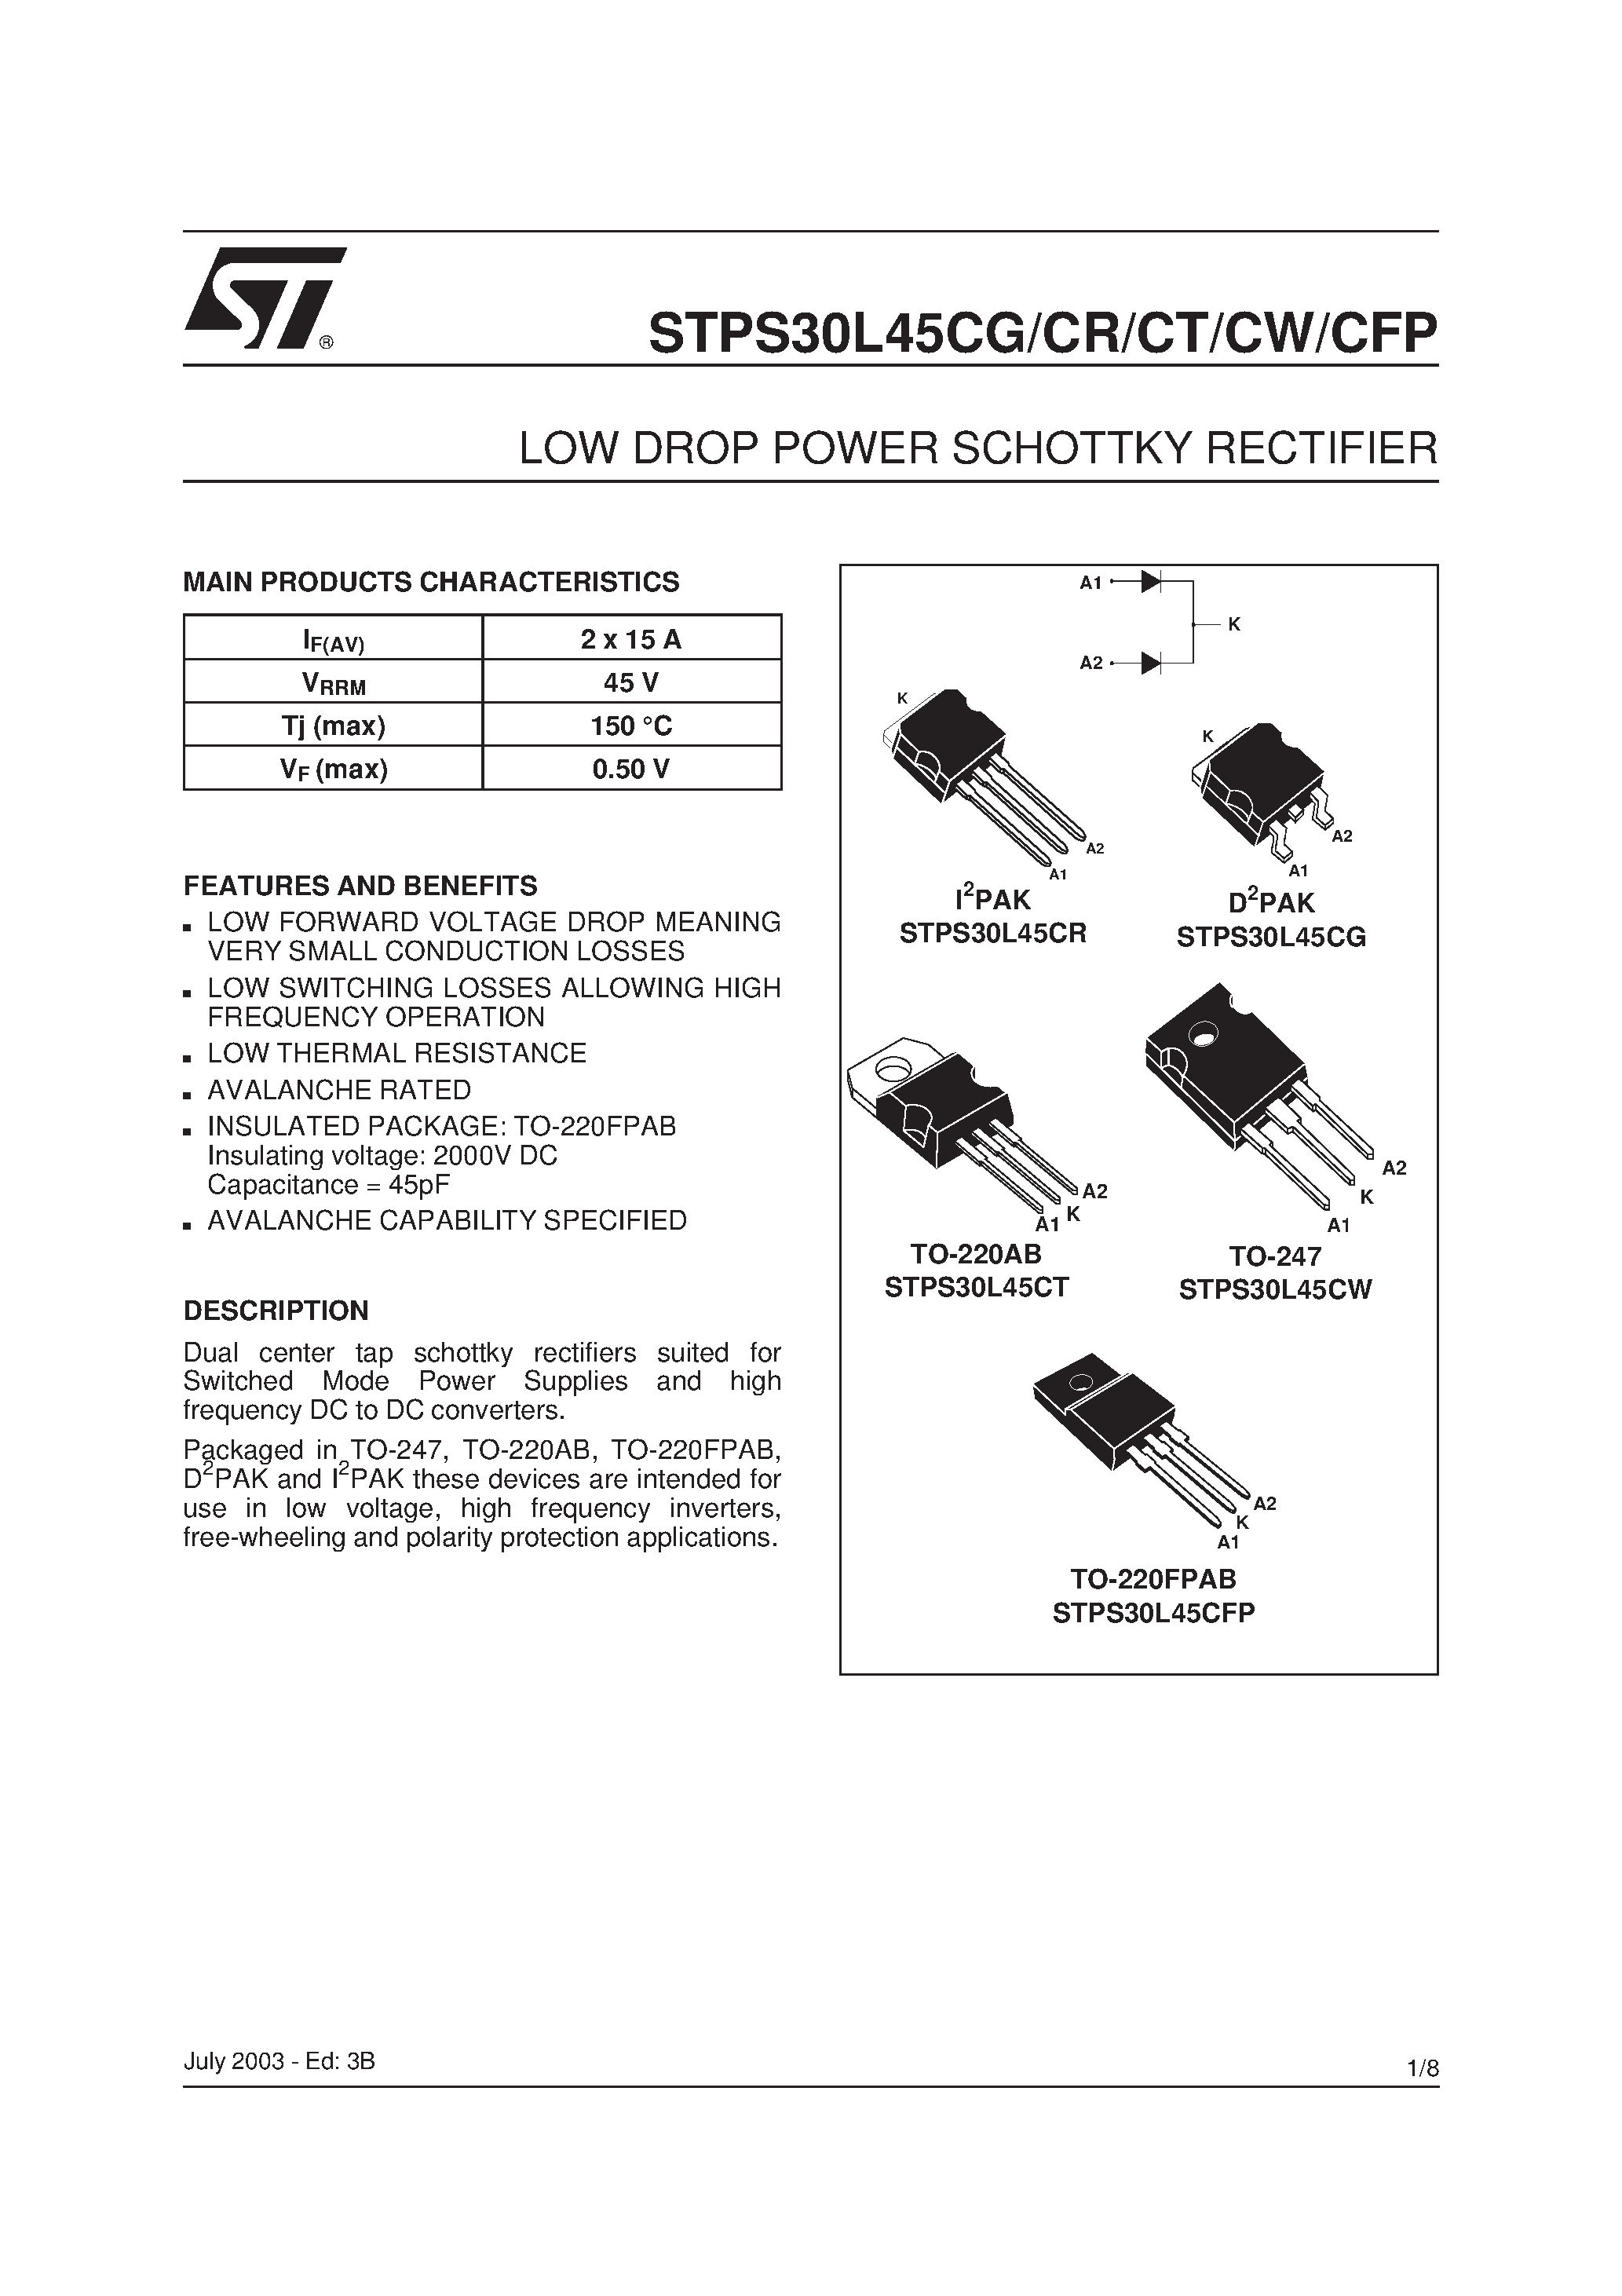 Datasheet STPS30L45CFP - (STPS30L45CG/CR/CT/CW/CFP) LOW DROP POWER SCHOTTKY RECTIFIER page 1